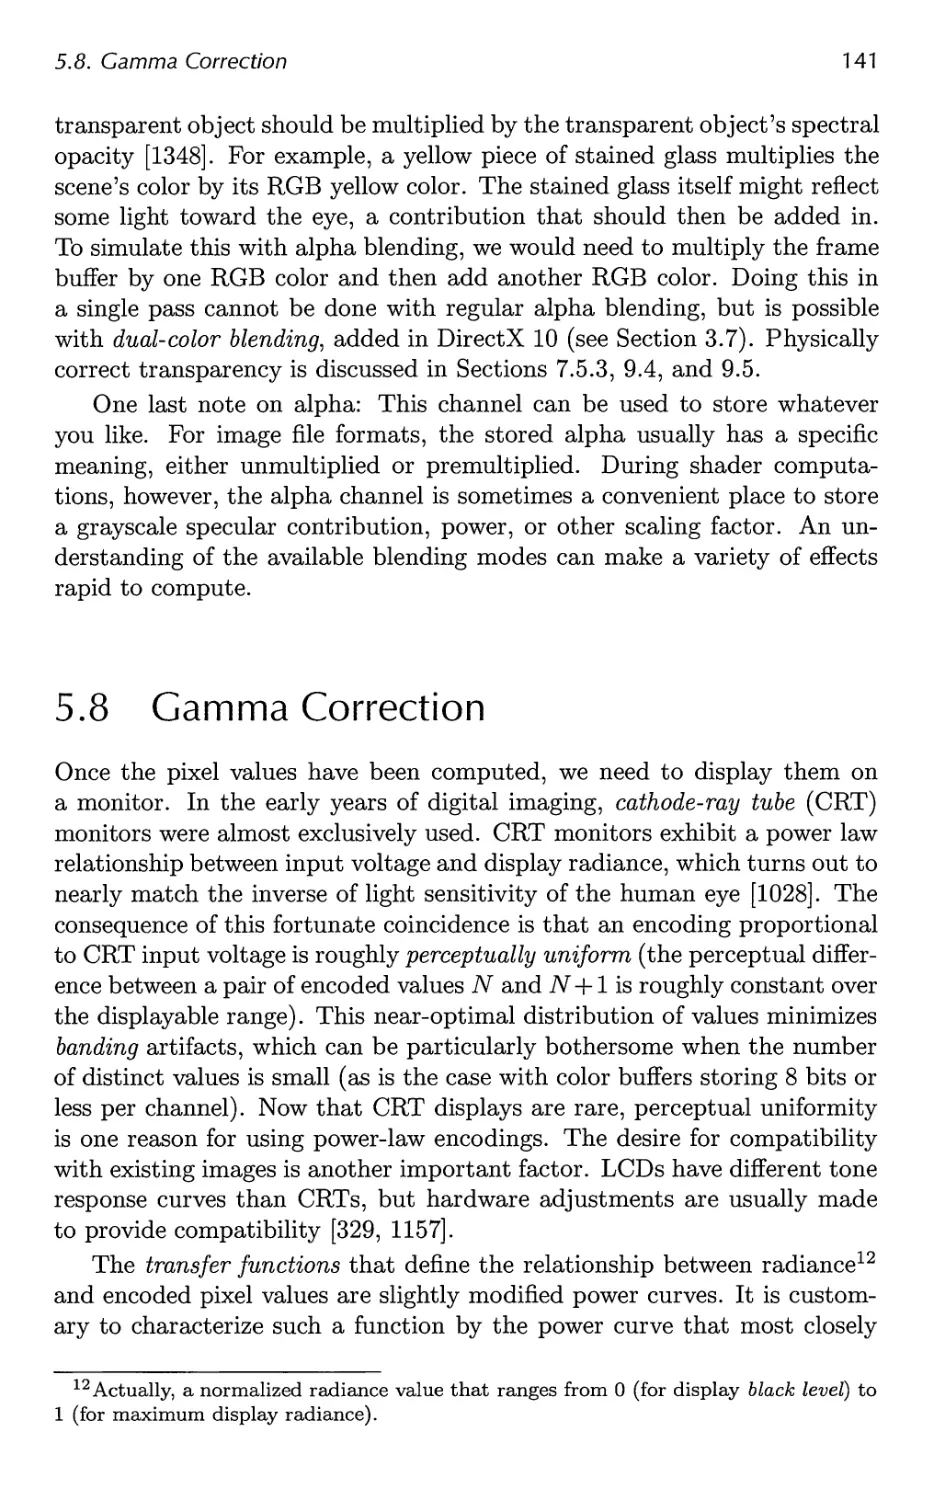 5.8 Gamma Correction